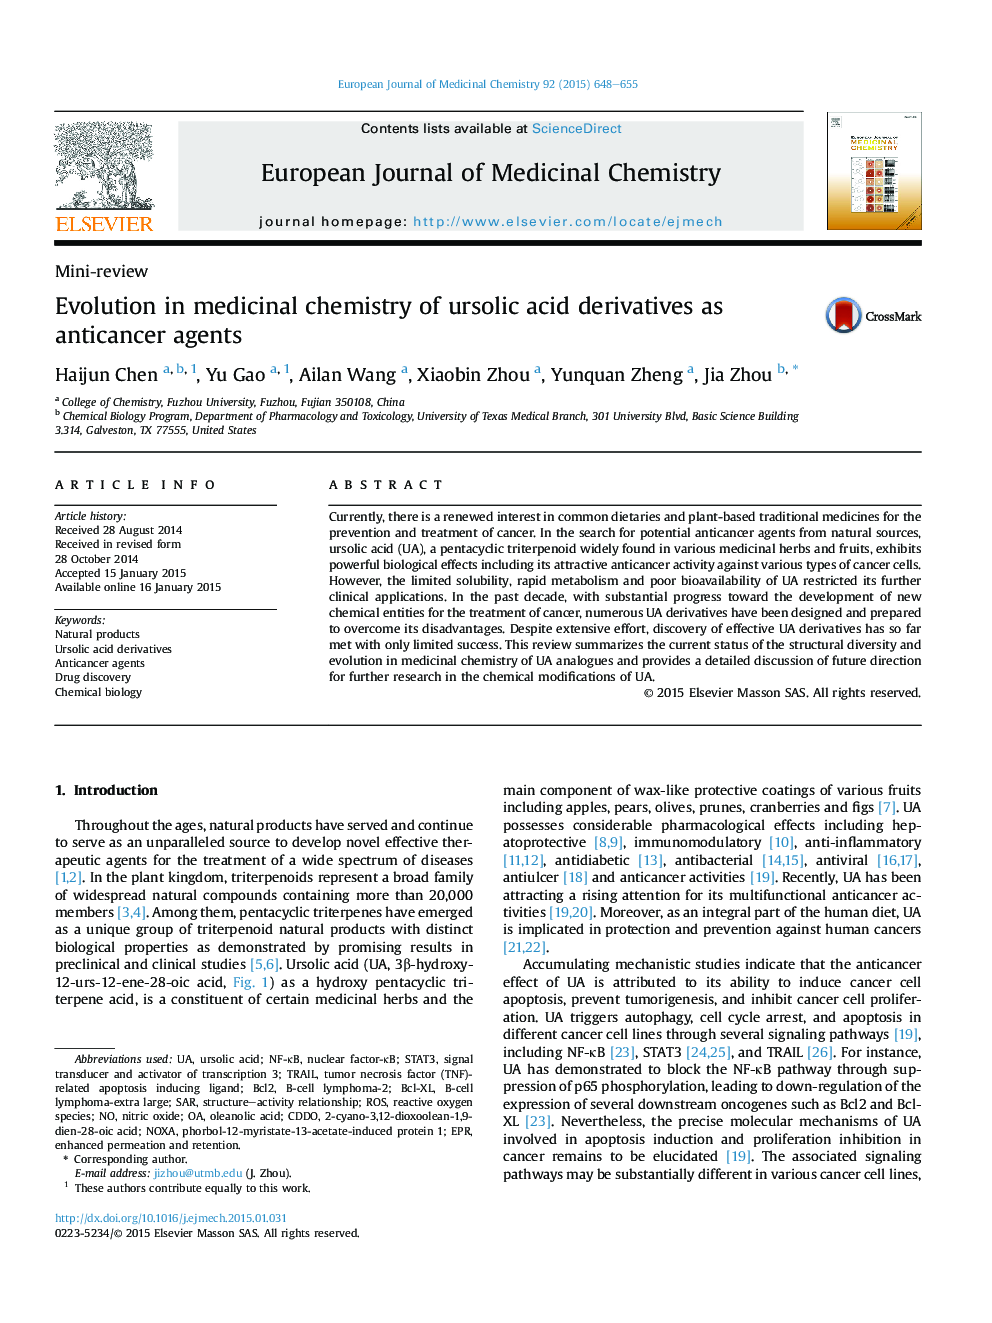 Evolution in medicinal chemistry of ursolic acid derivatives as anticancer agents